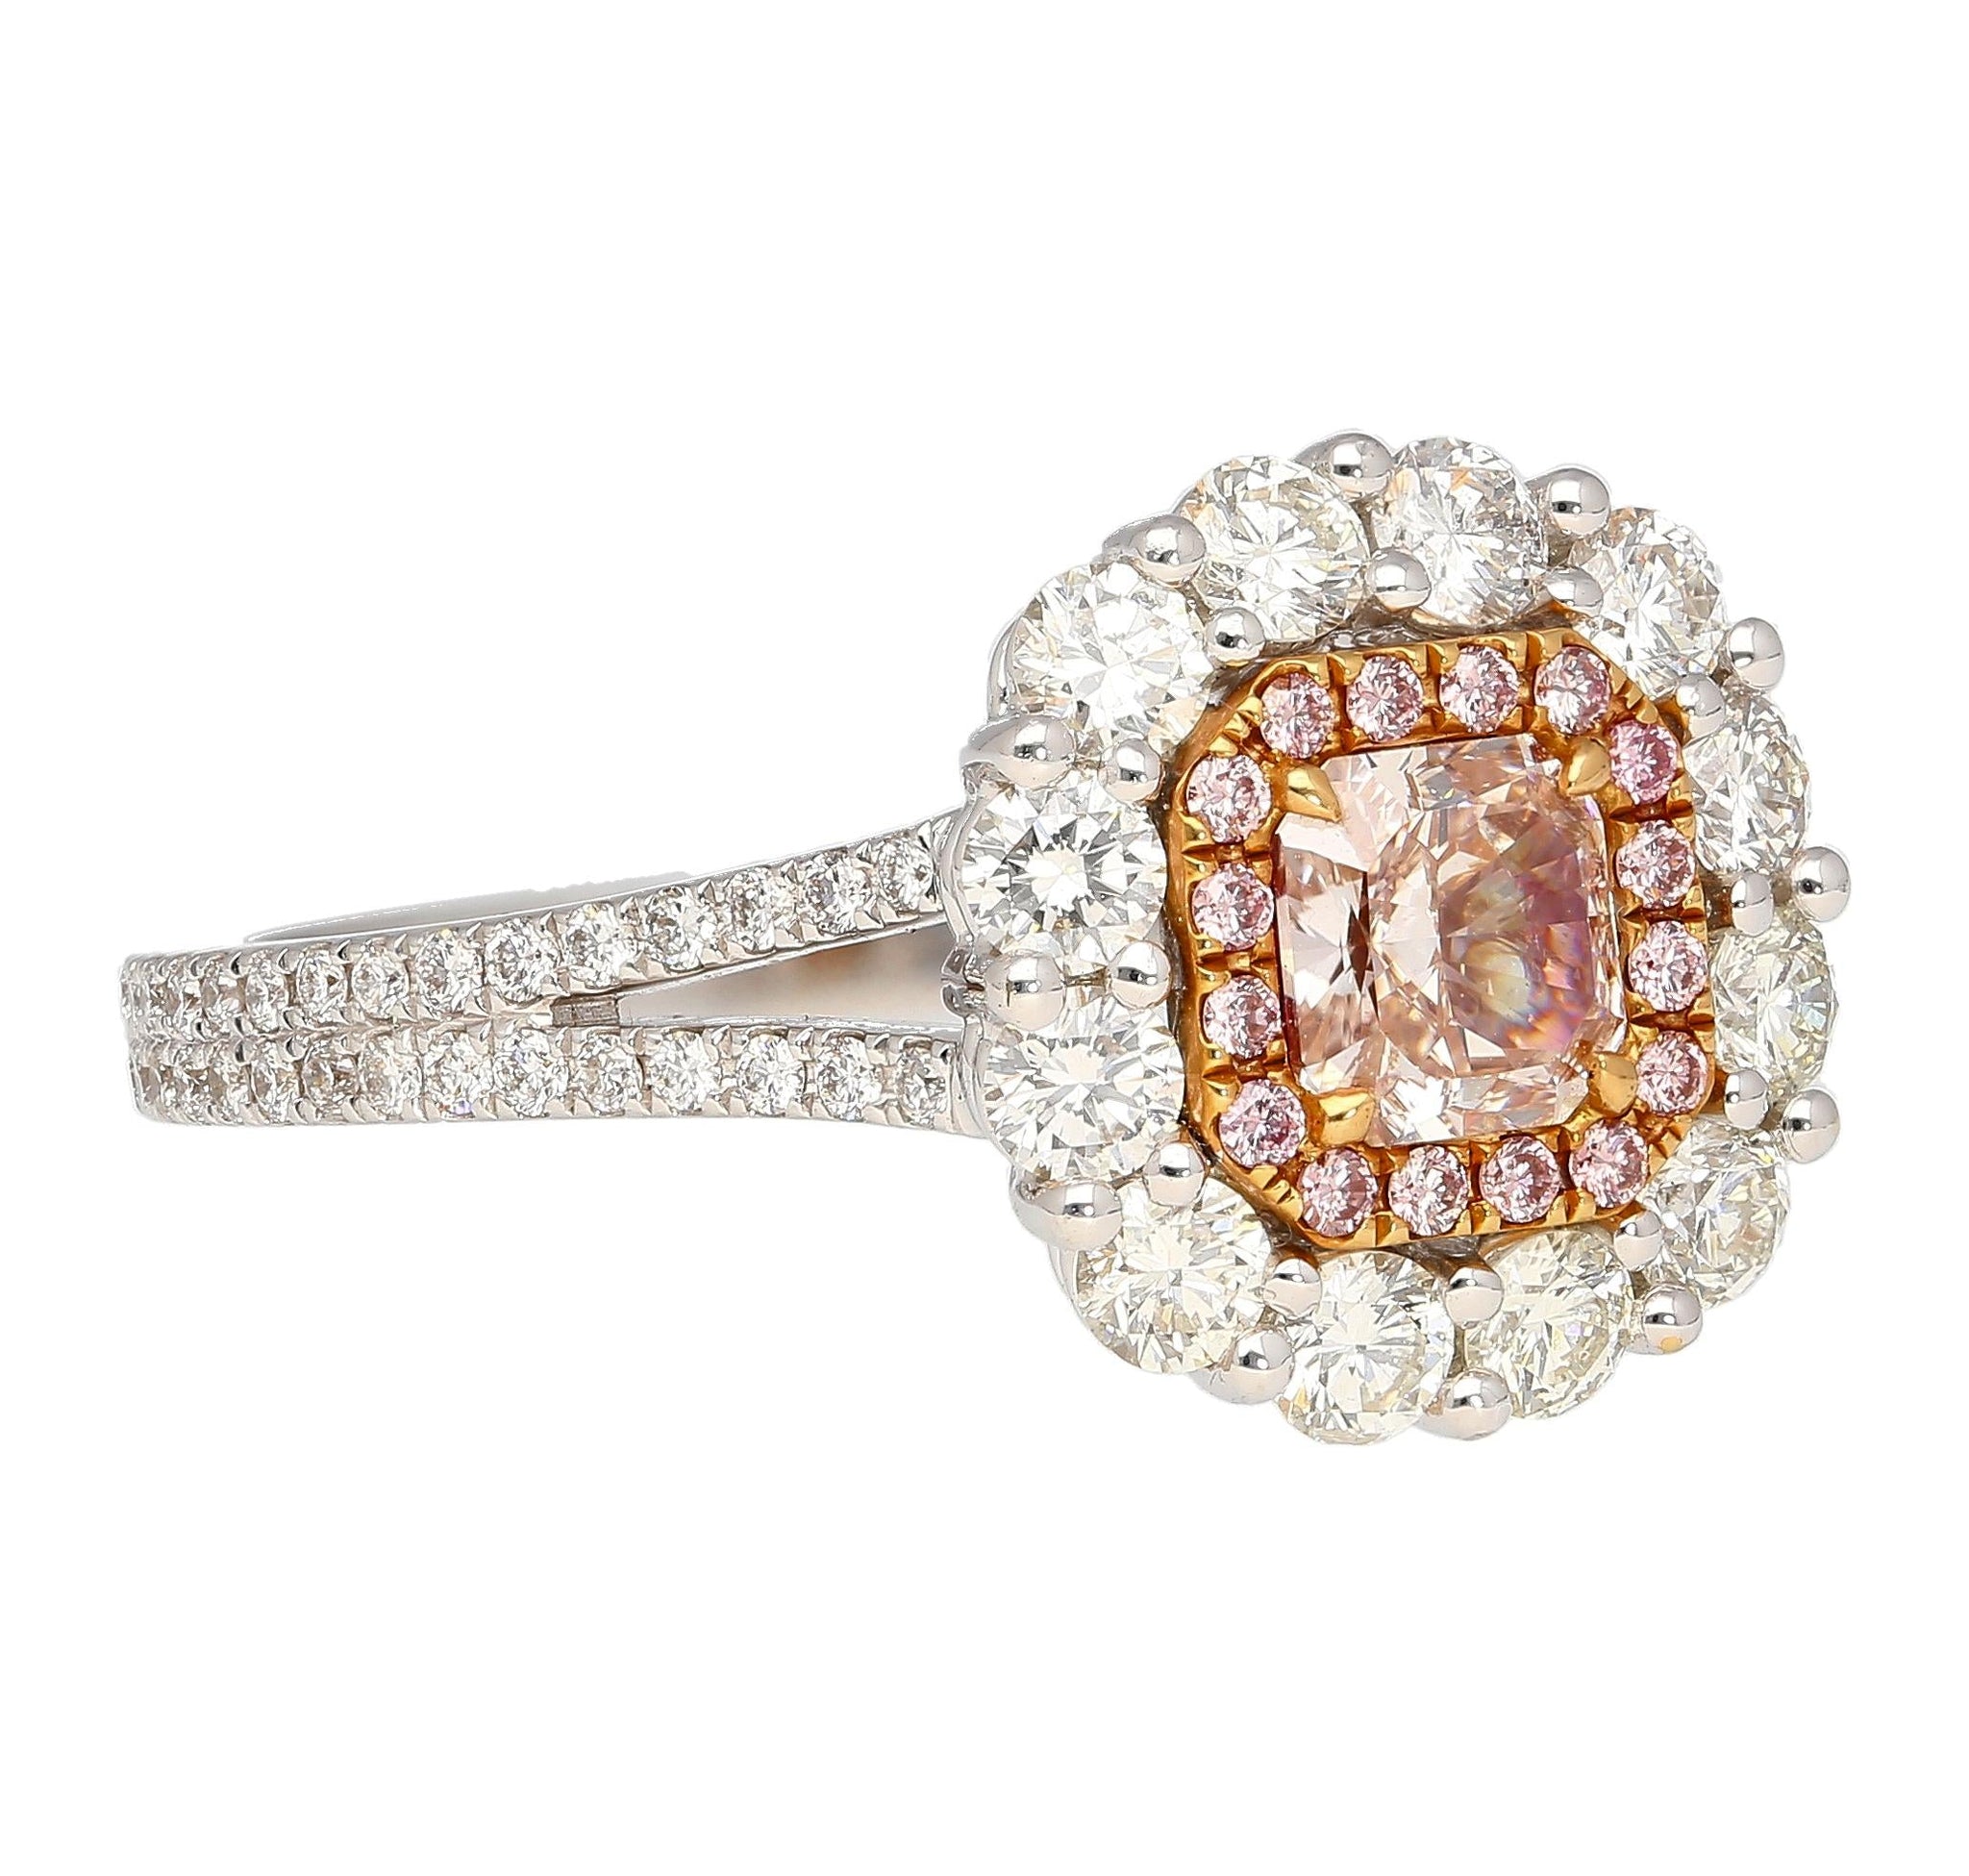 GIA Certified 1.51 CTTW Fancy Light Brown Pink Internally Flawless Diamond Ring